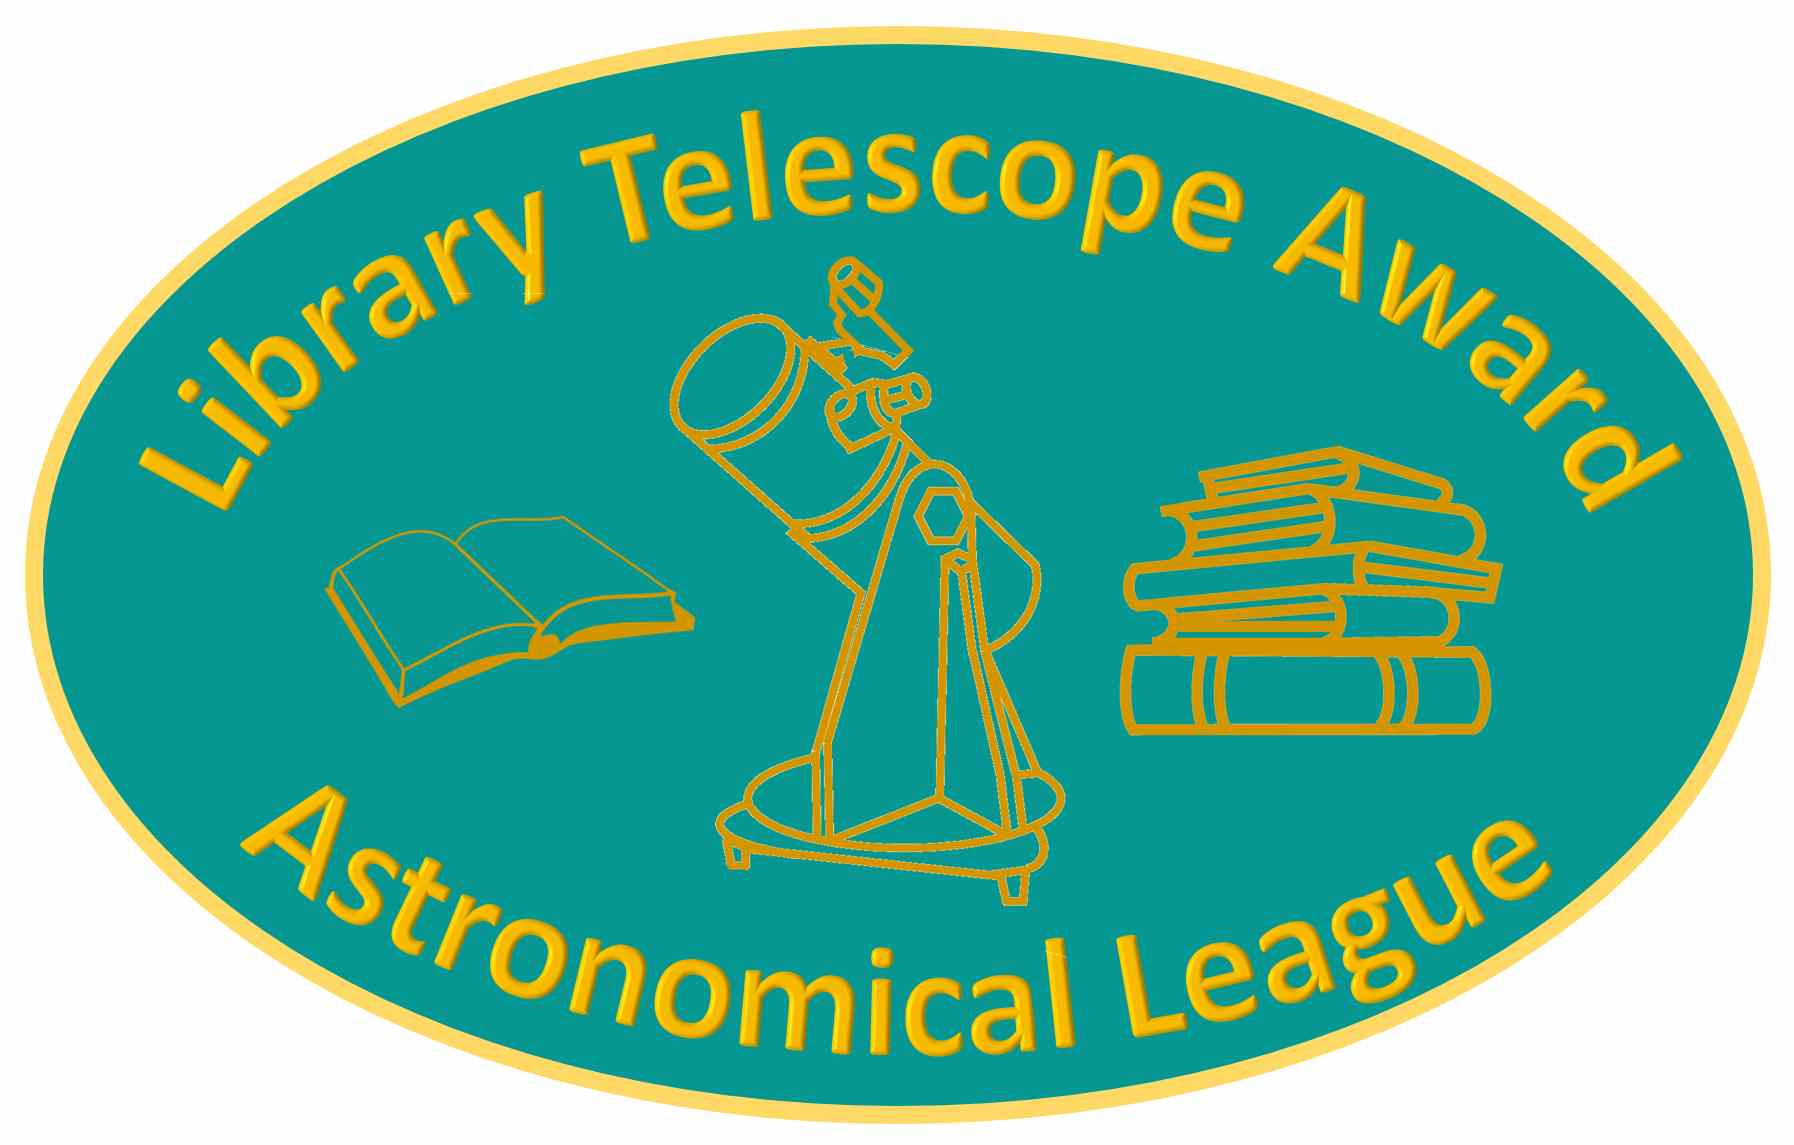 Library Telescope Observing Program Pin